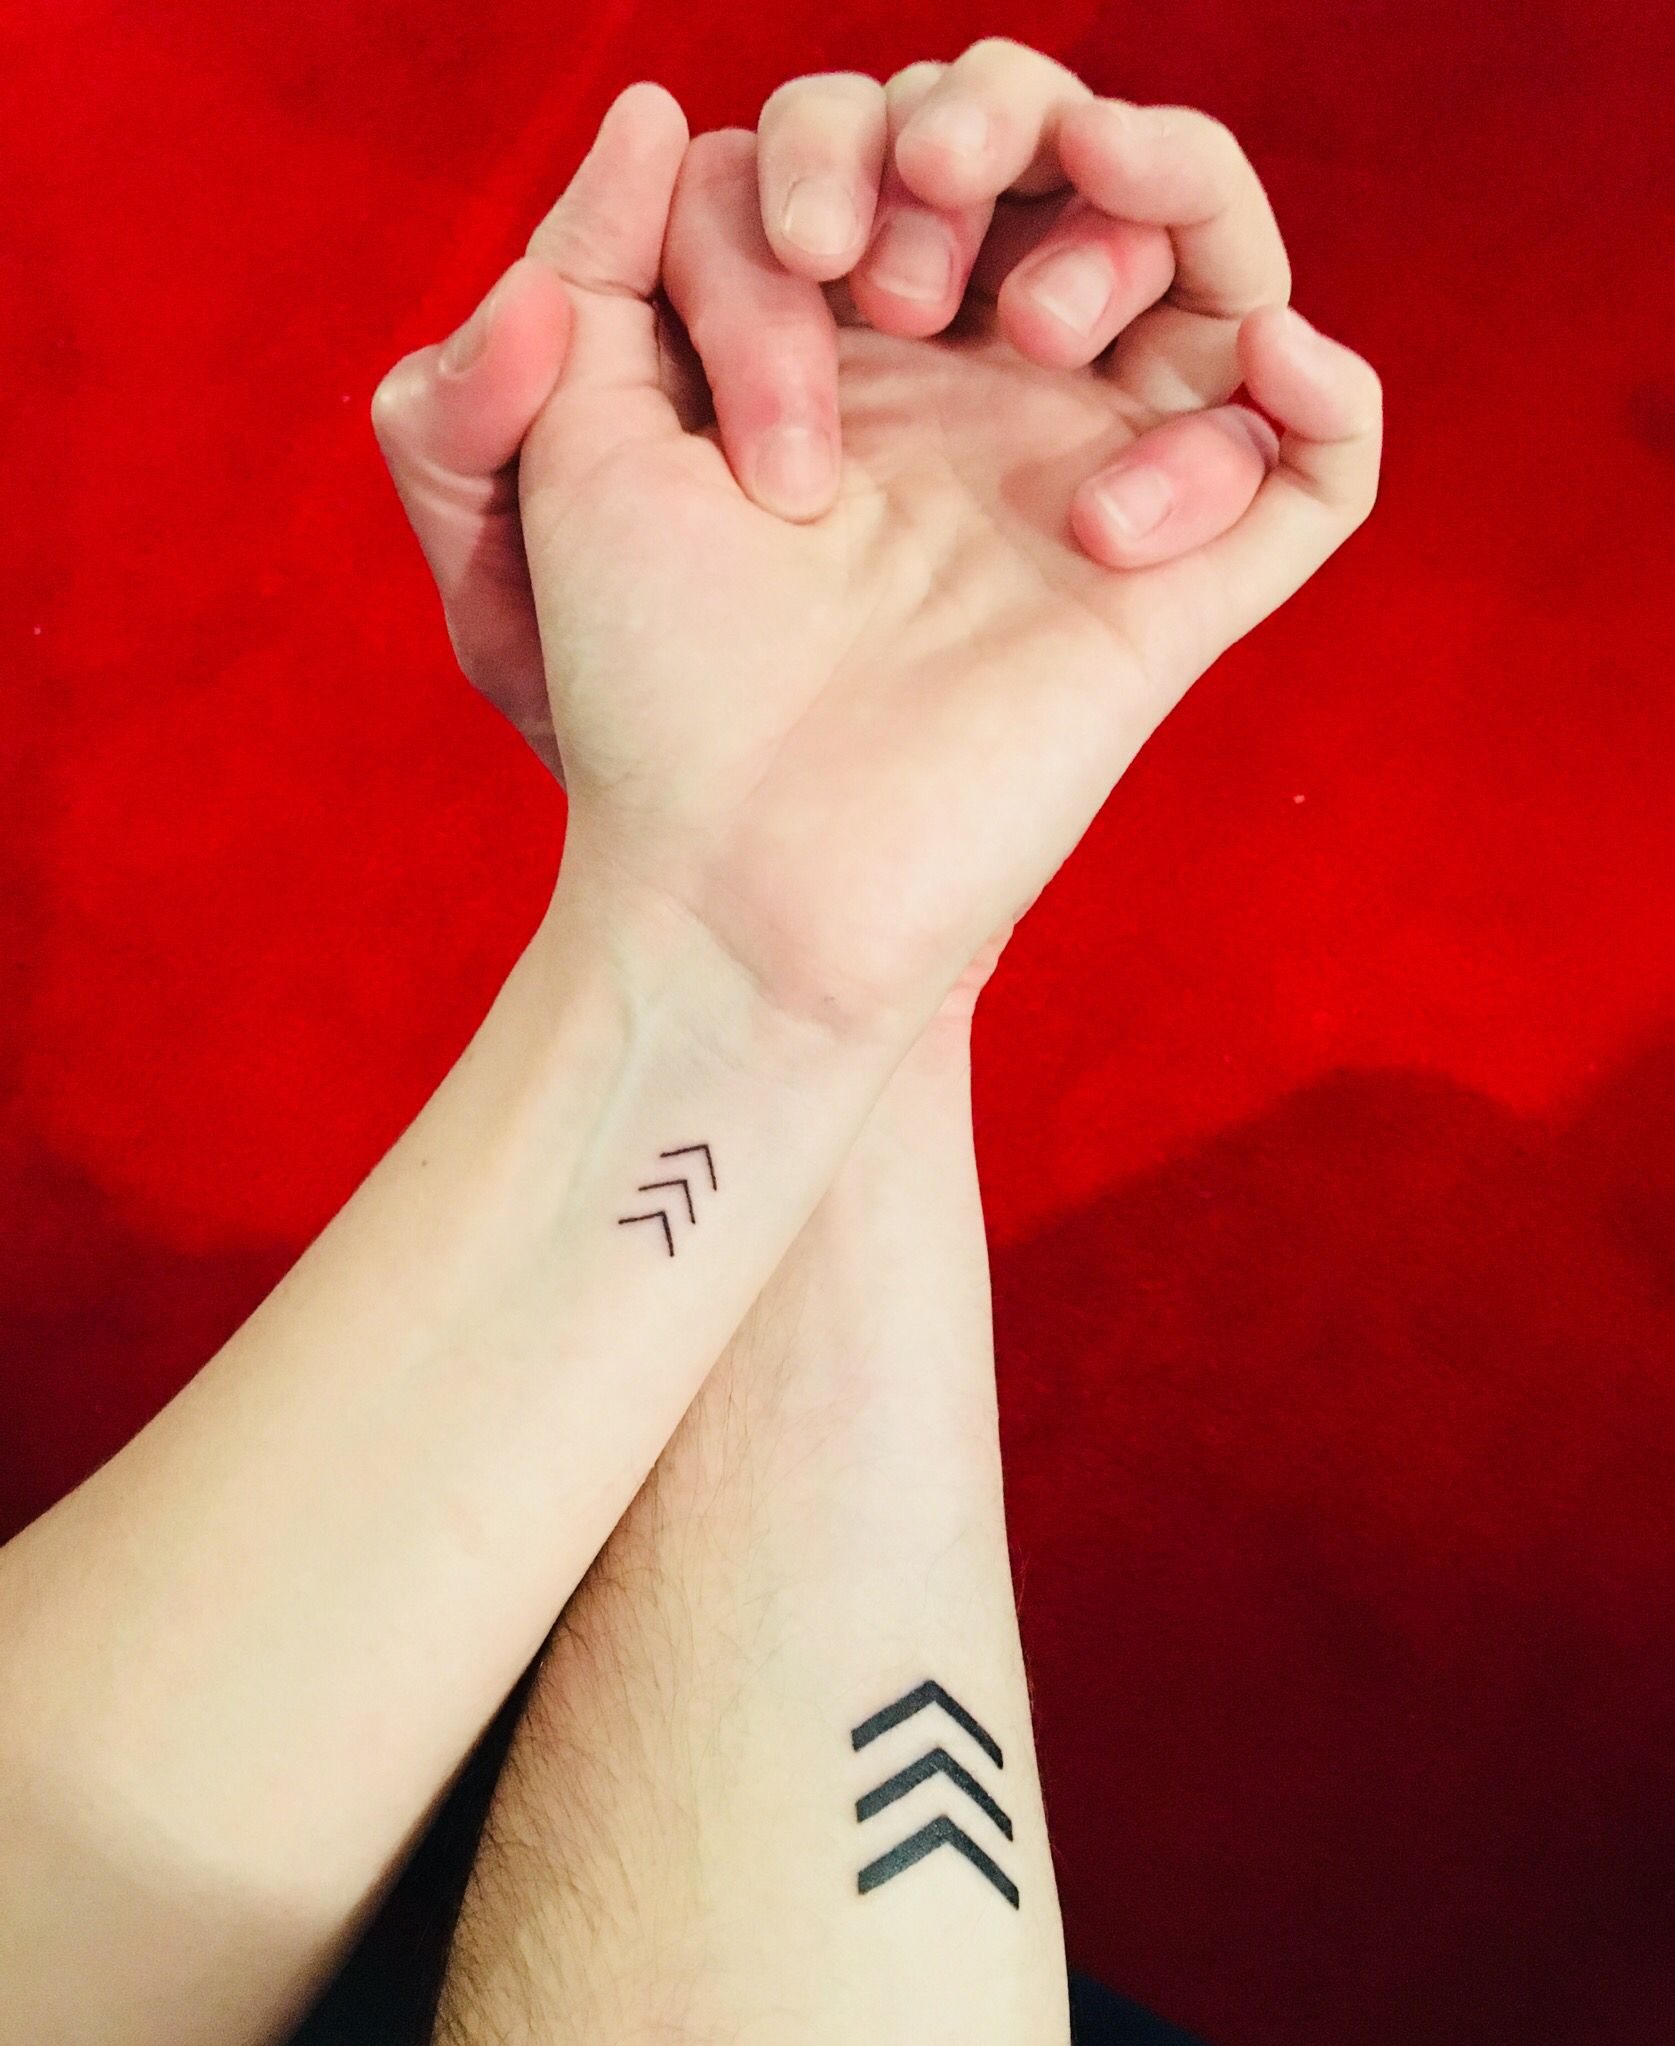 Chevron Tattoo - Meaningful tattoos for women